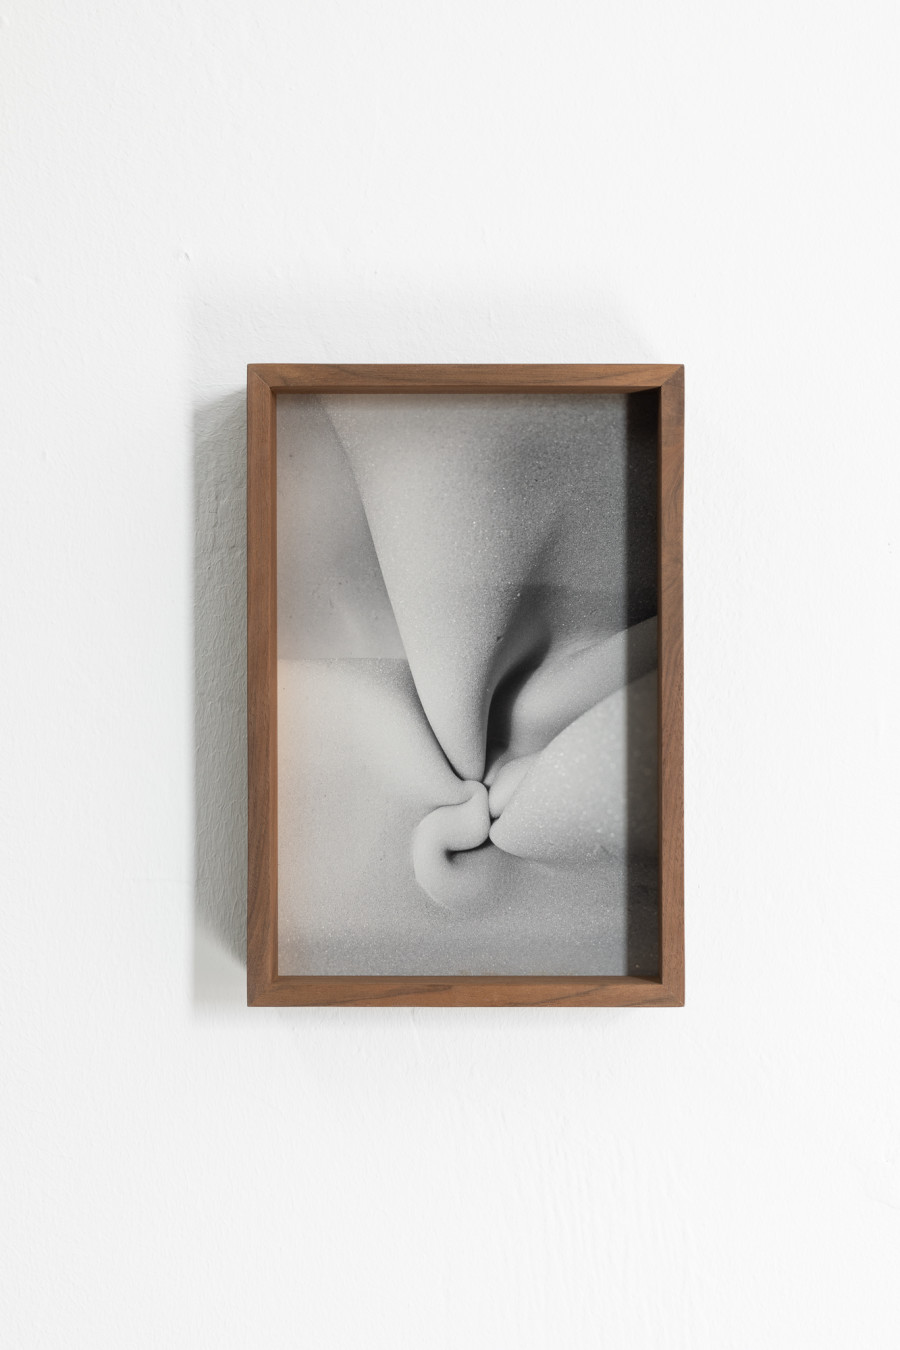 Martín Soto Climént, Marea de espuma, 2015, piezography on Hahnemühle Photo Rag Ultra Smooth 100% Cotton paper and walnut wood, 31.5 x 21.5 x 6 cm. Photo: Kilian Bannwart